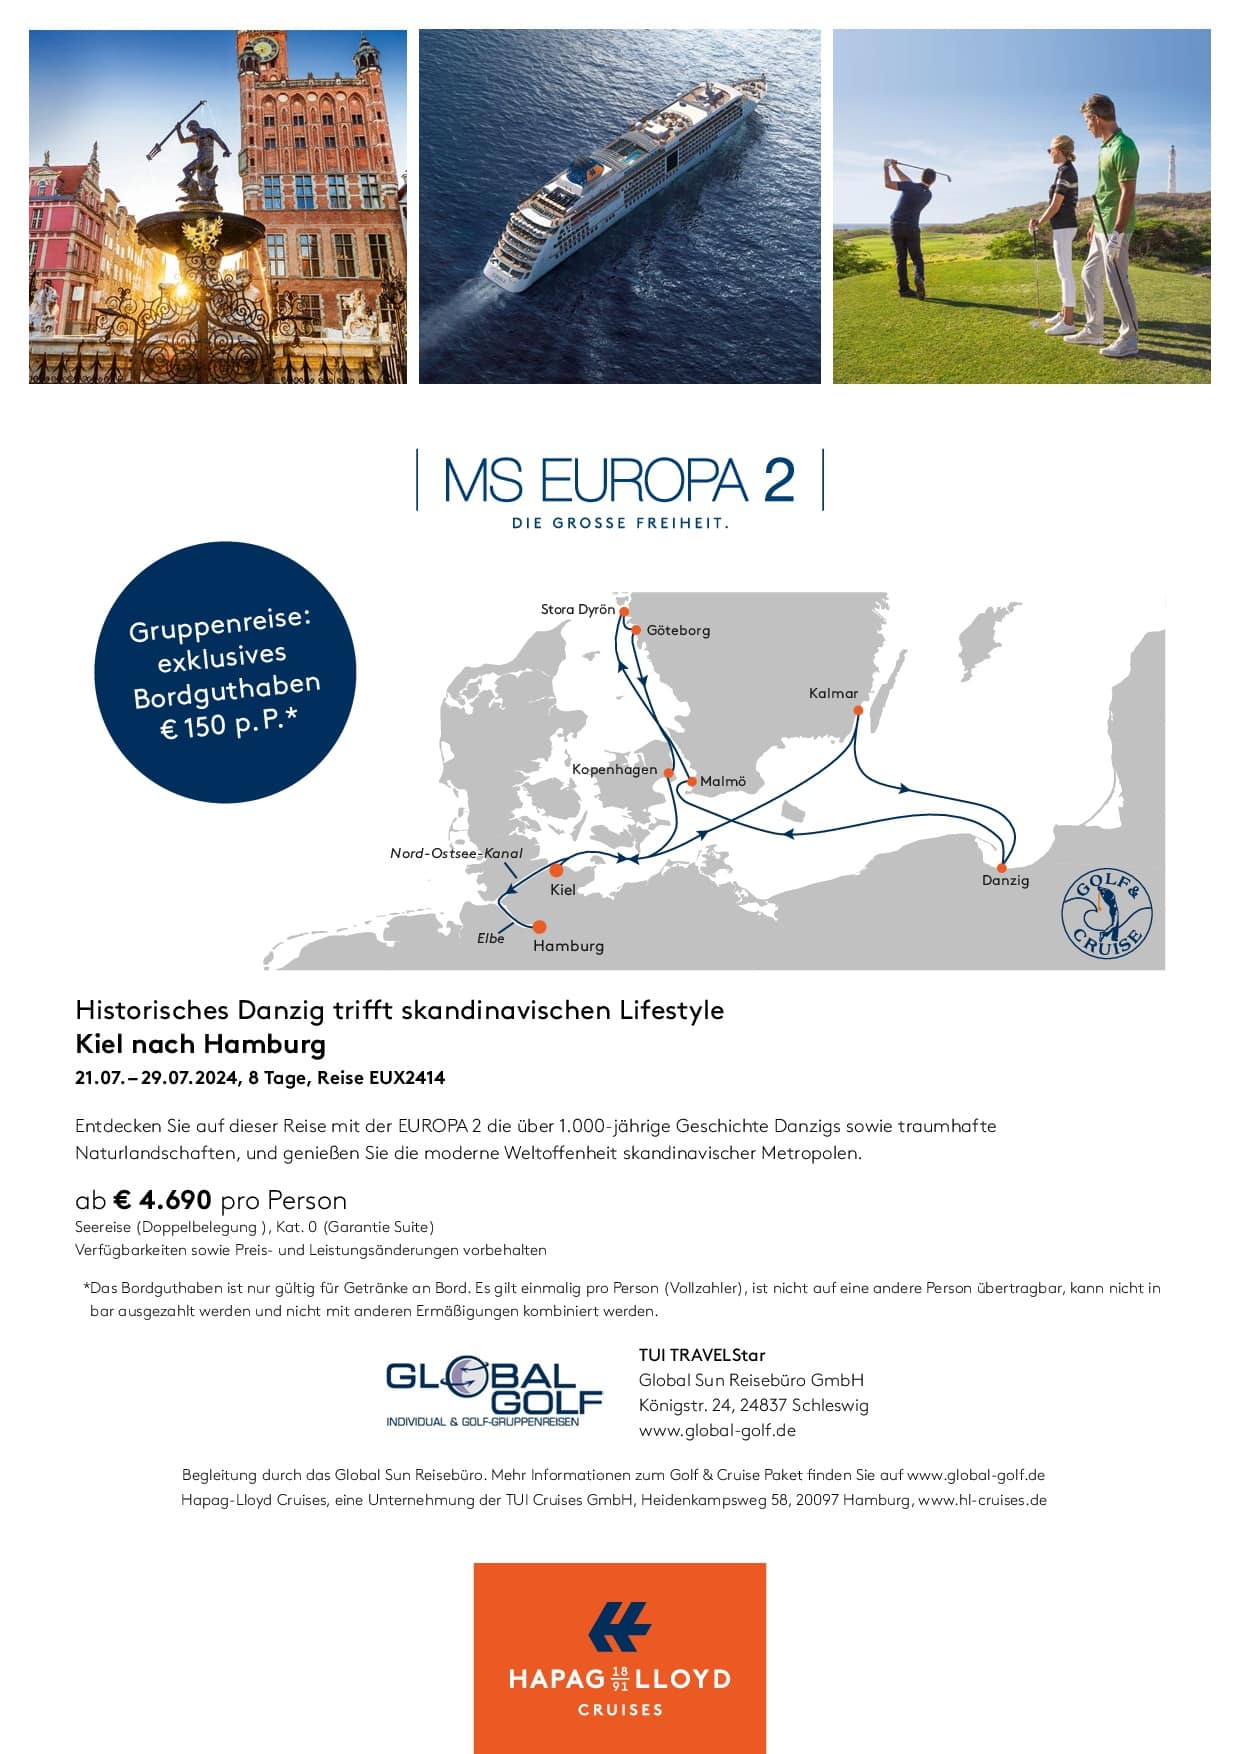 Golf & Cruise: Baltic Sea Golf-Kreuzfahrt